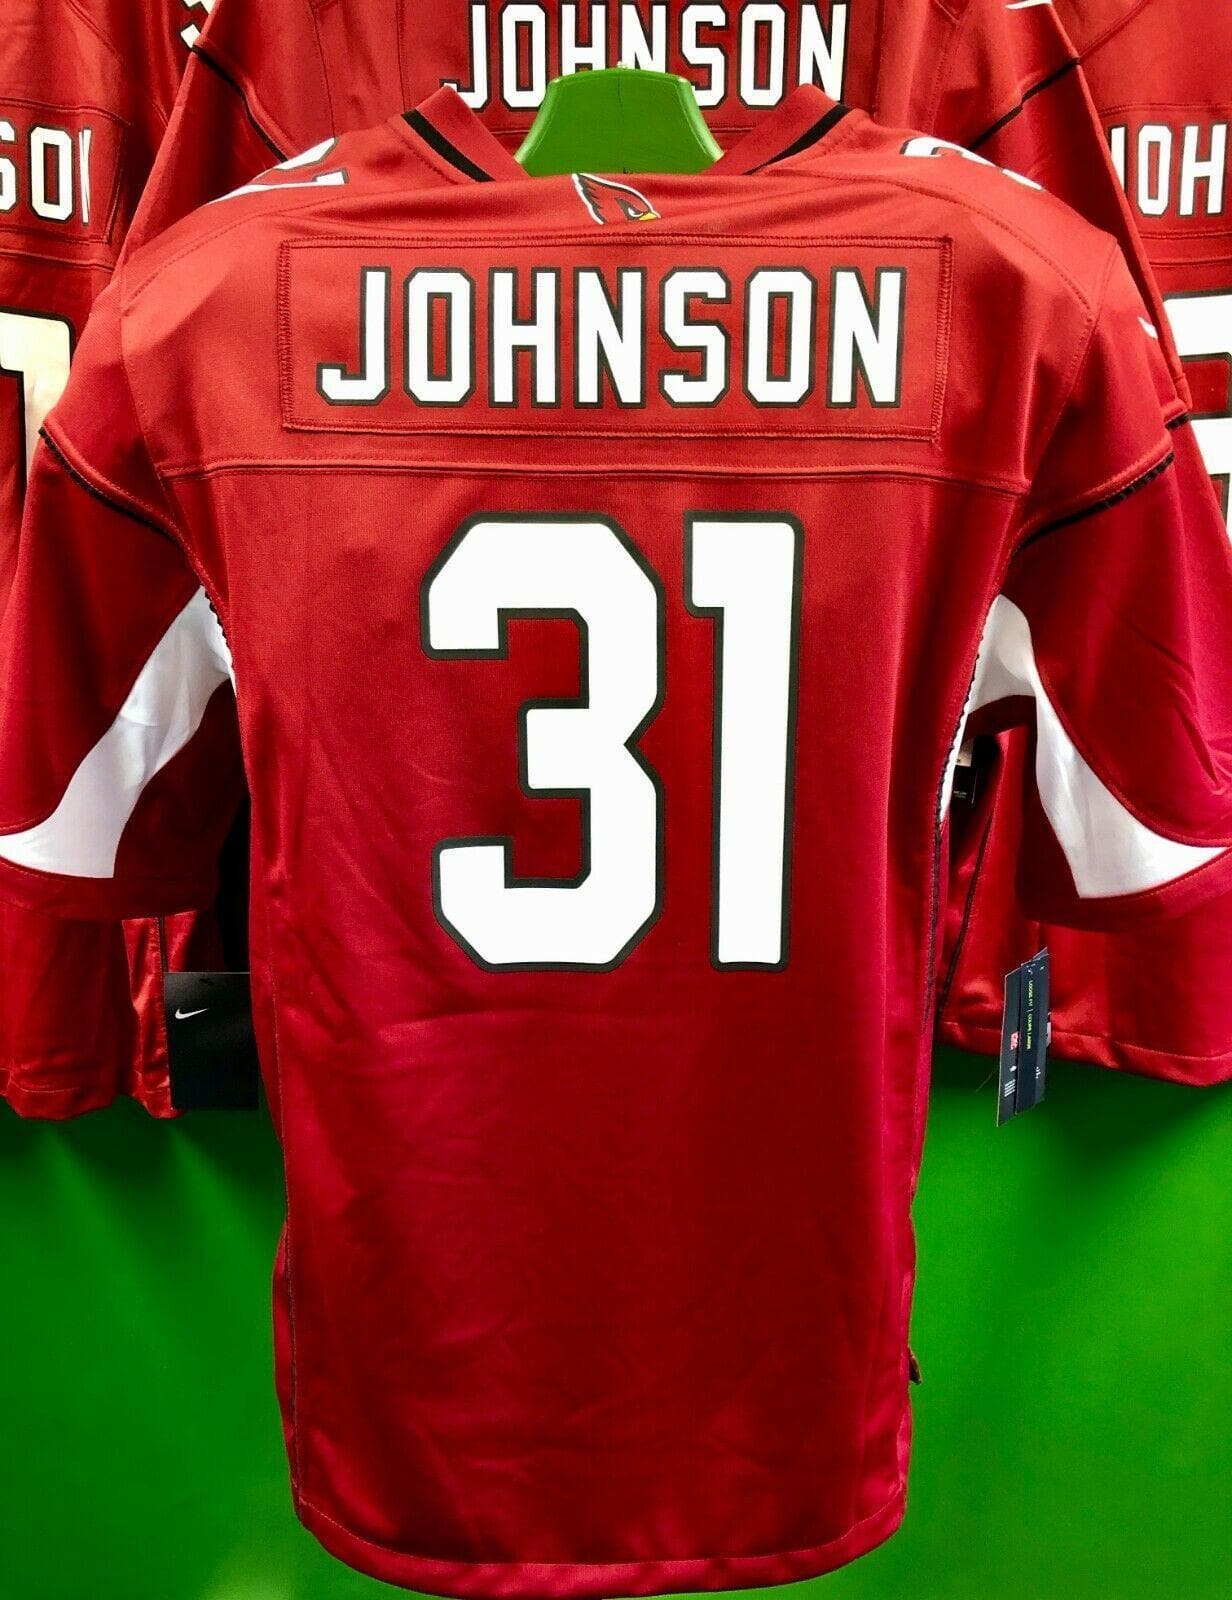 NFL Arizona Cardinals Johnson #31 Game Jersey Men's XXXL 3X-Large NWT